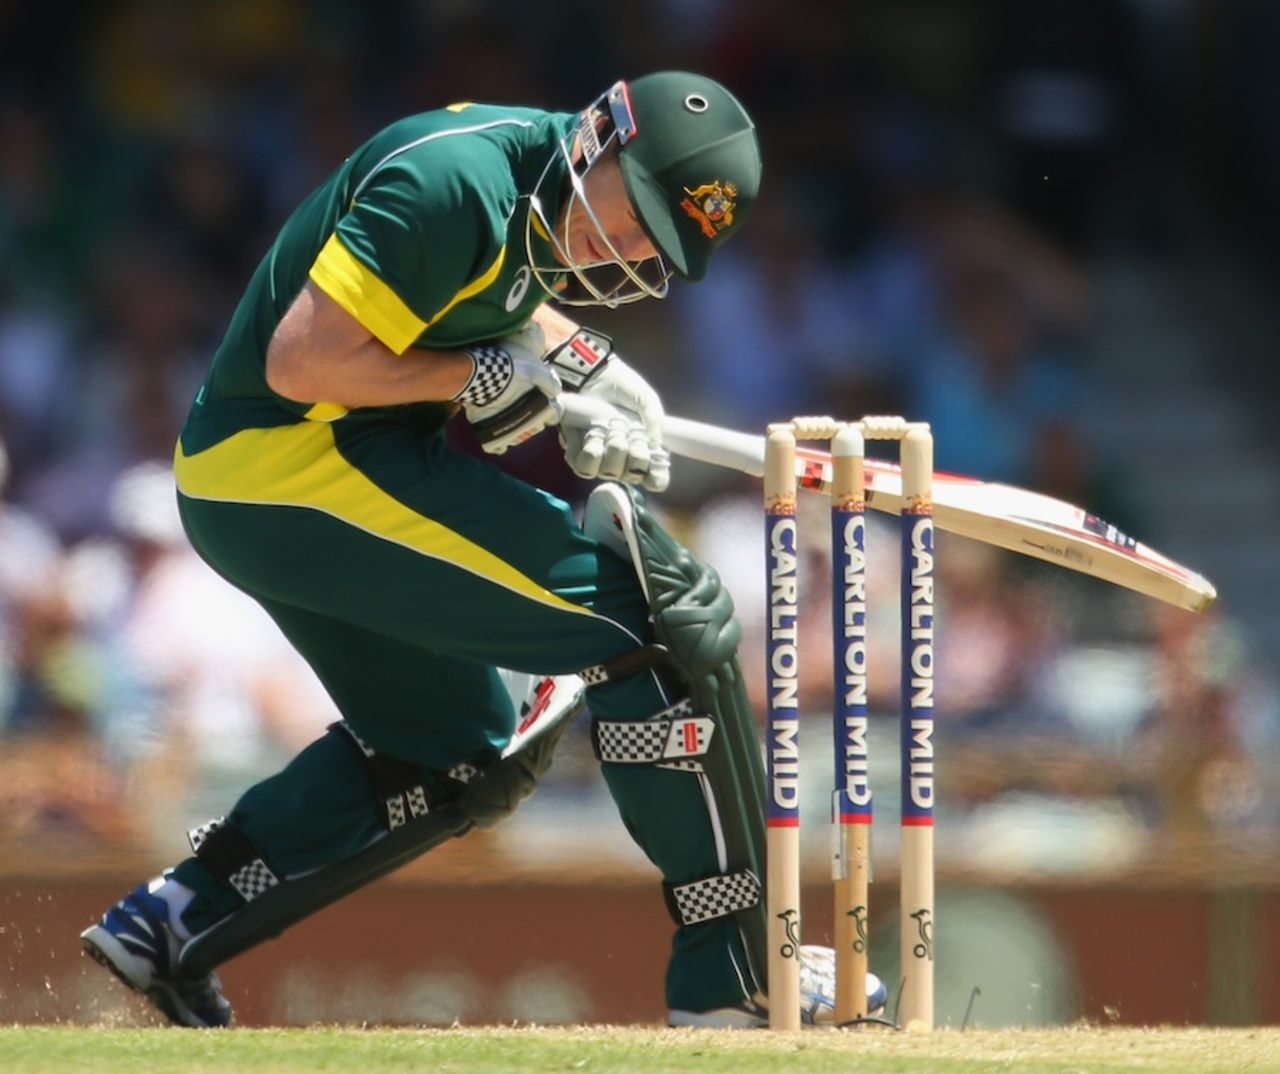 George Bailey ducks under a bouncer, Australia v South Africa, 1st ODI, Perth, November 14, 2014